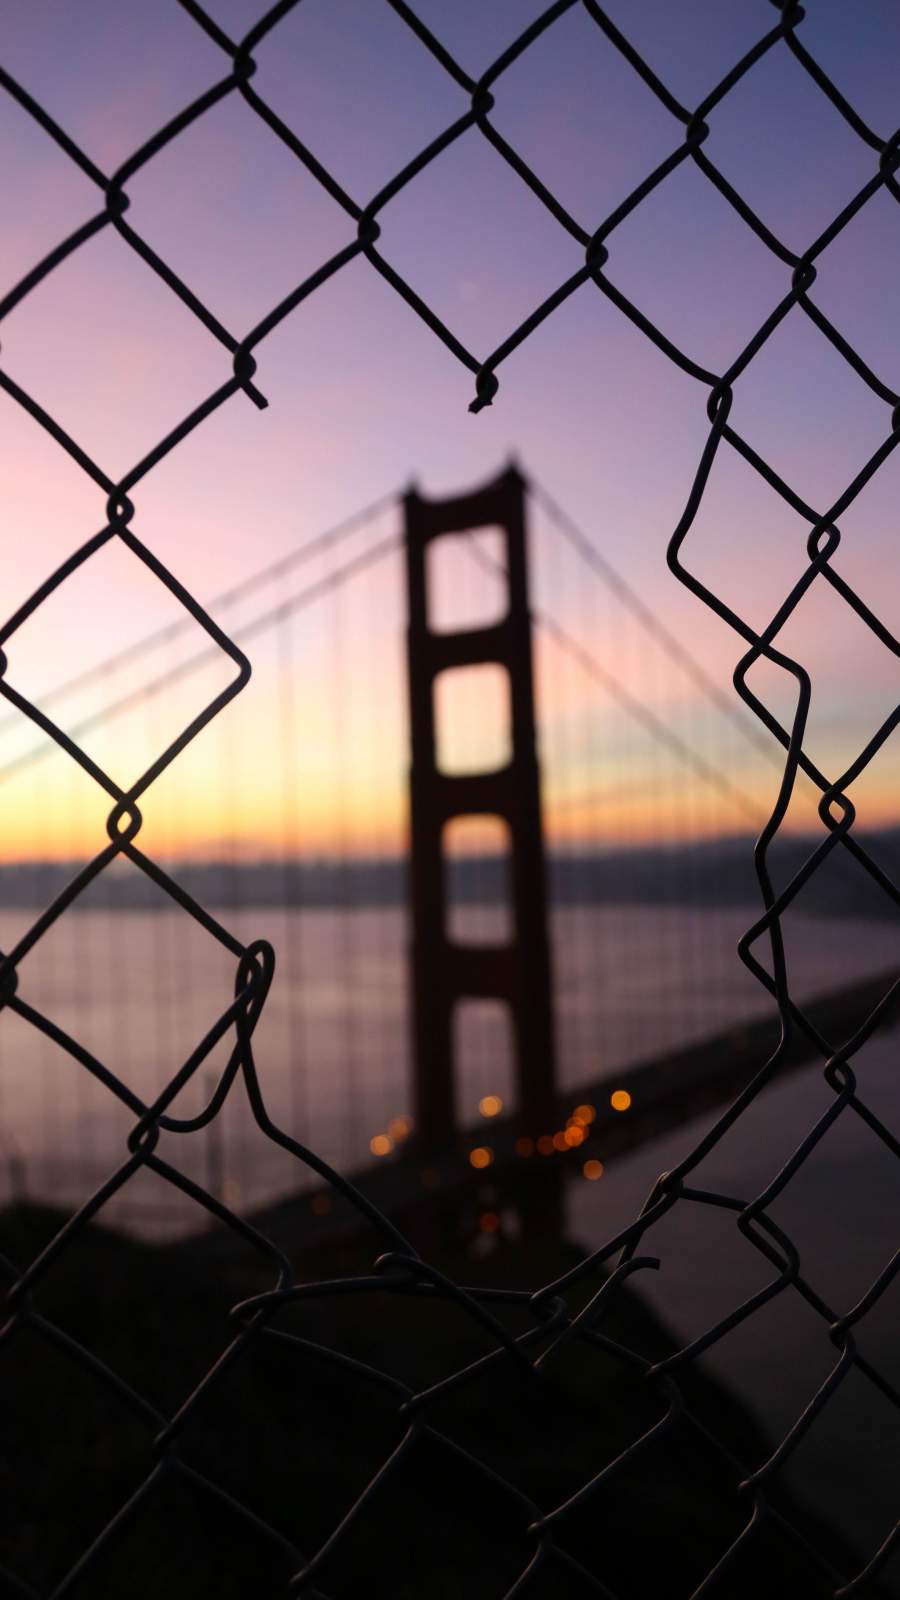 Golden Gate Bridge through a chain link fence during sunset - Sunrise